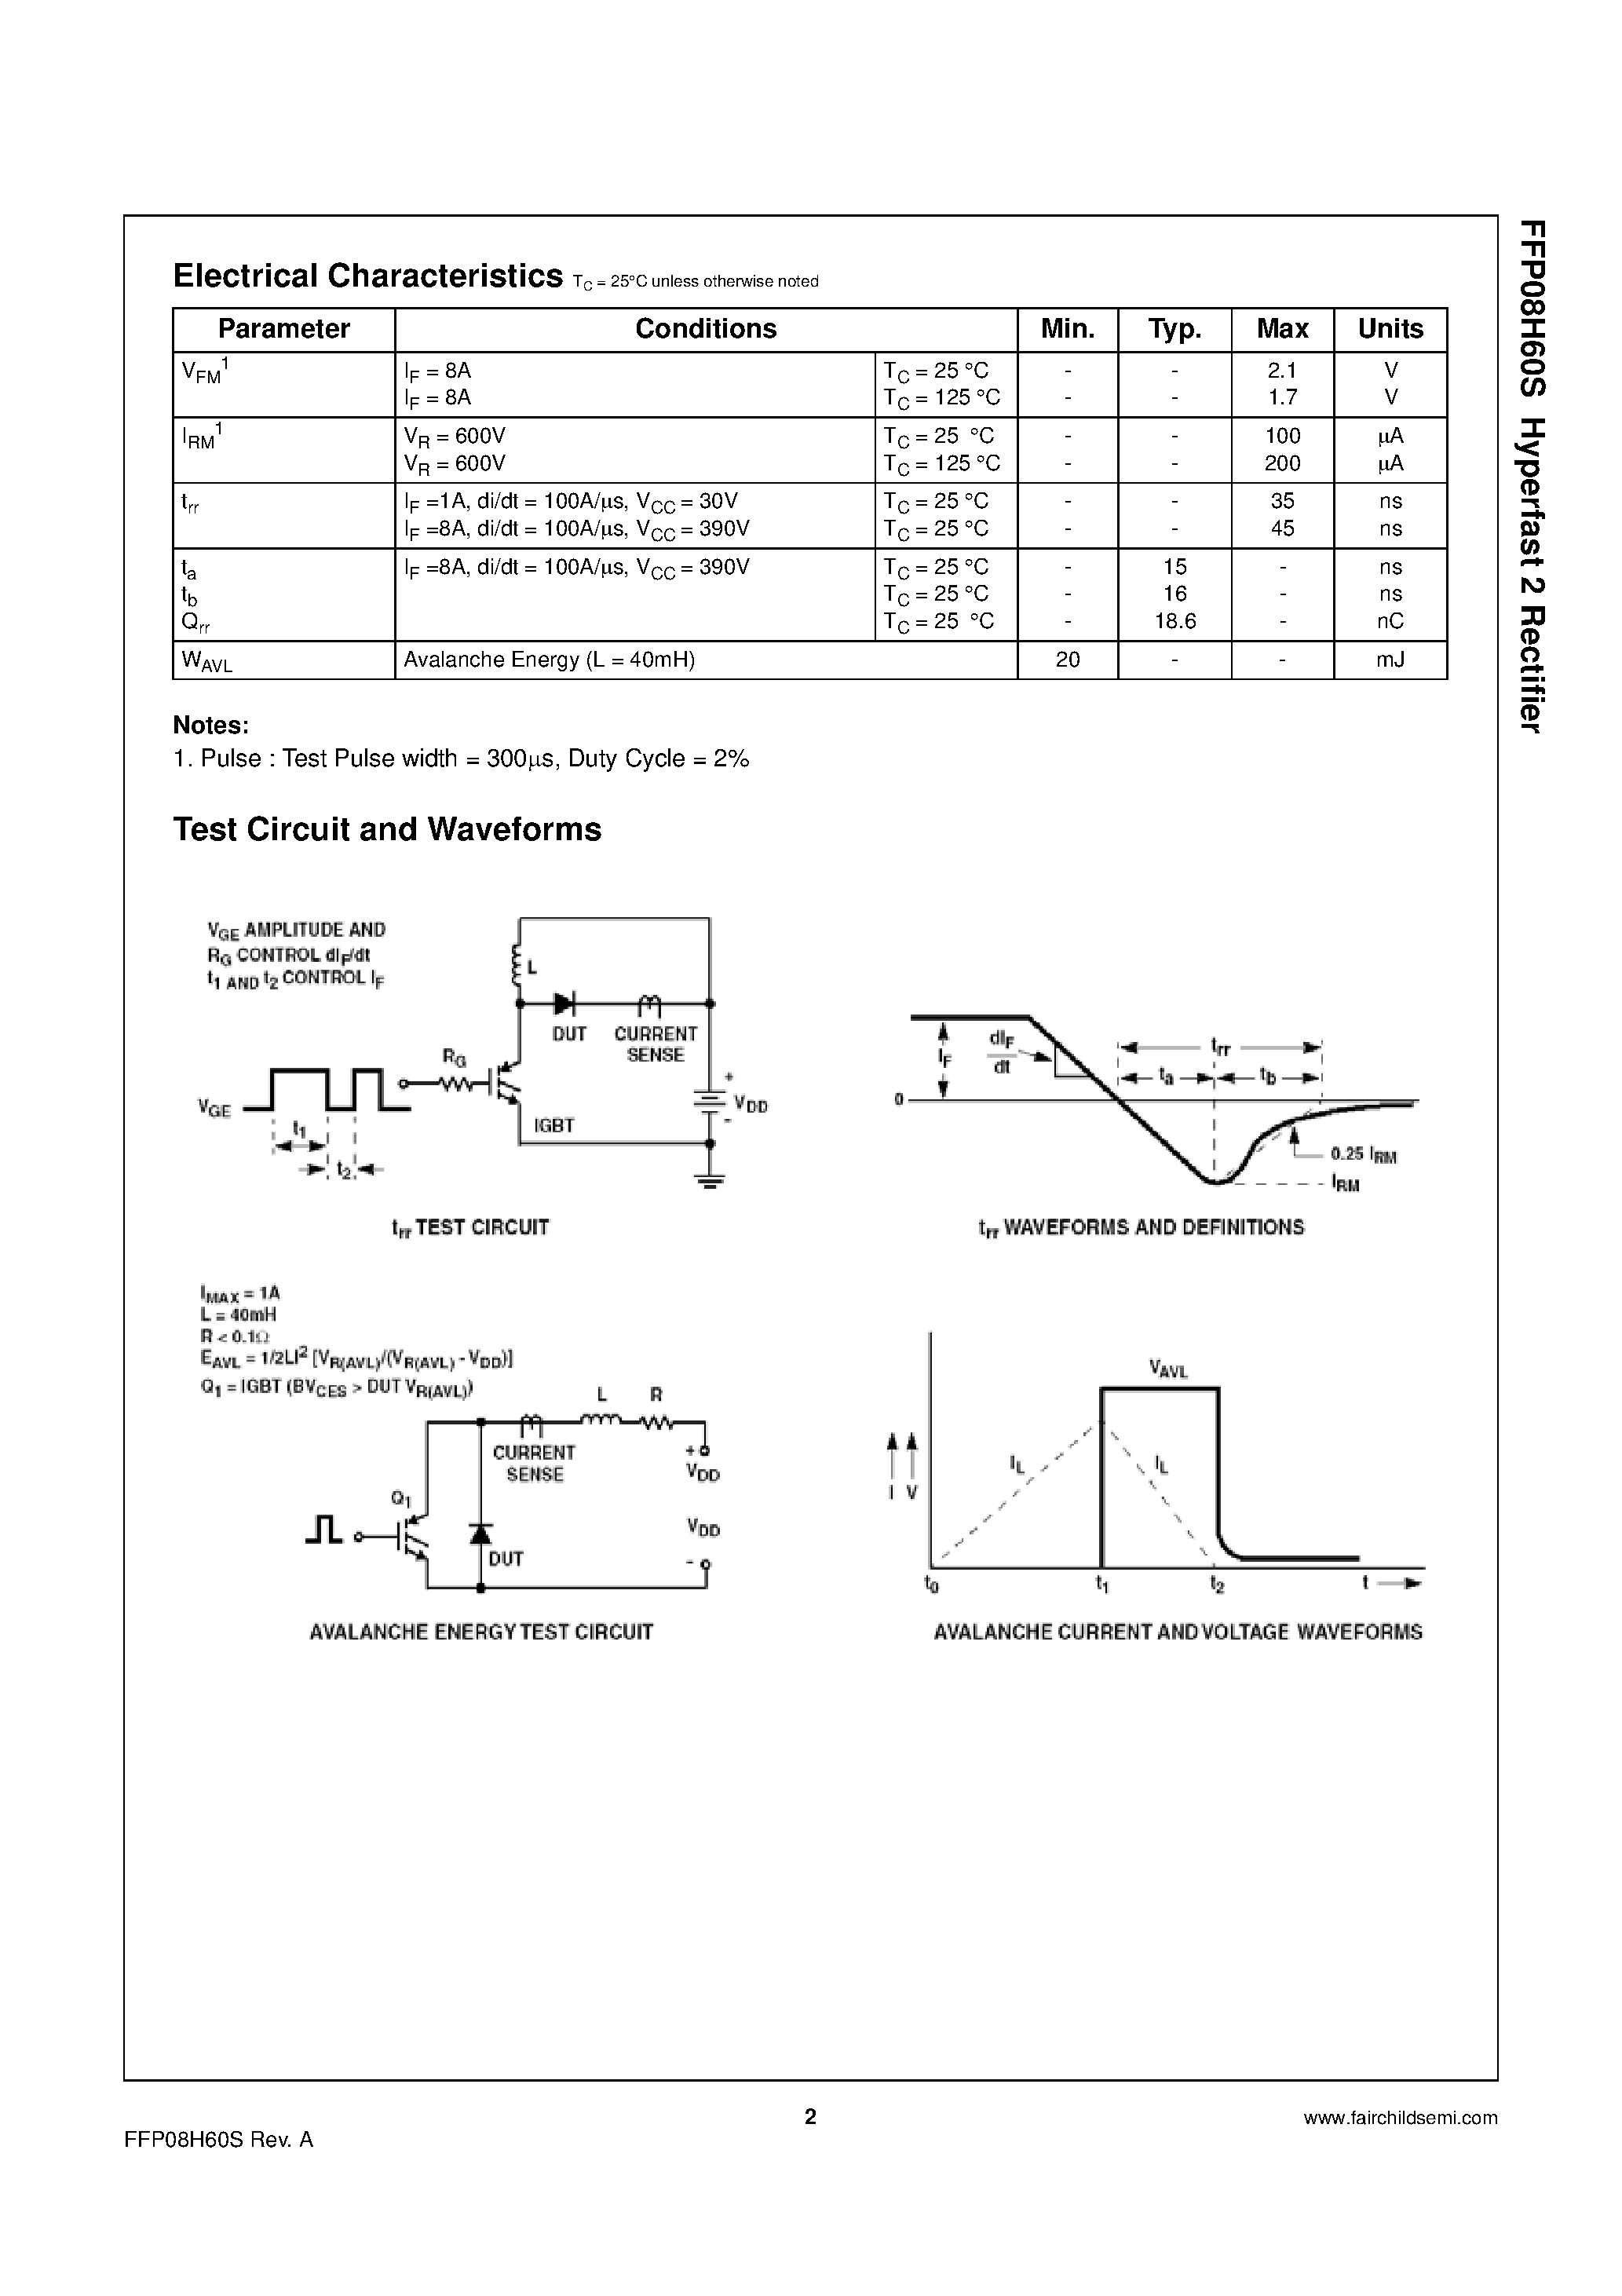 Datasheet FFP08H60S - Hyperfast 2 Rectifier page 2